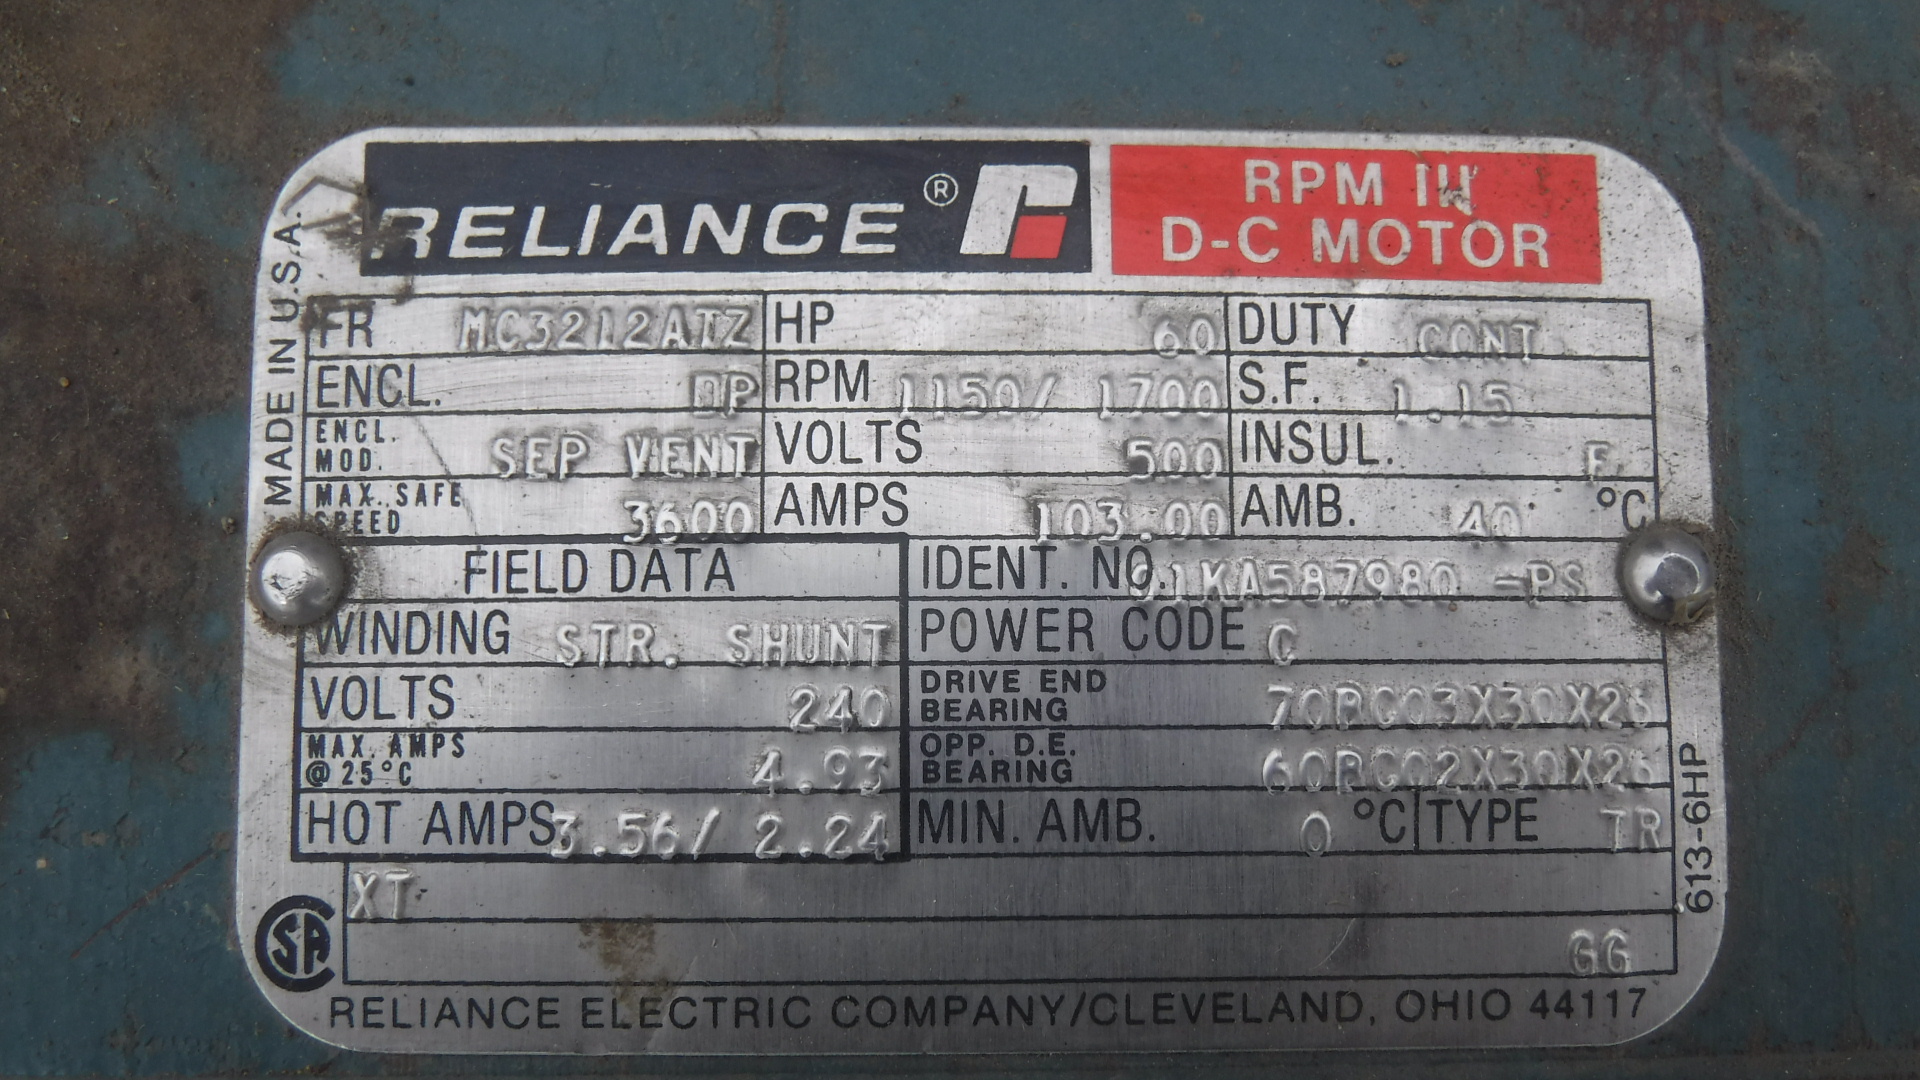 Reliance 60 HP 1150/1700 RPM MC3212ATZ DC Motors 83330